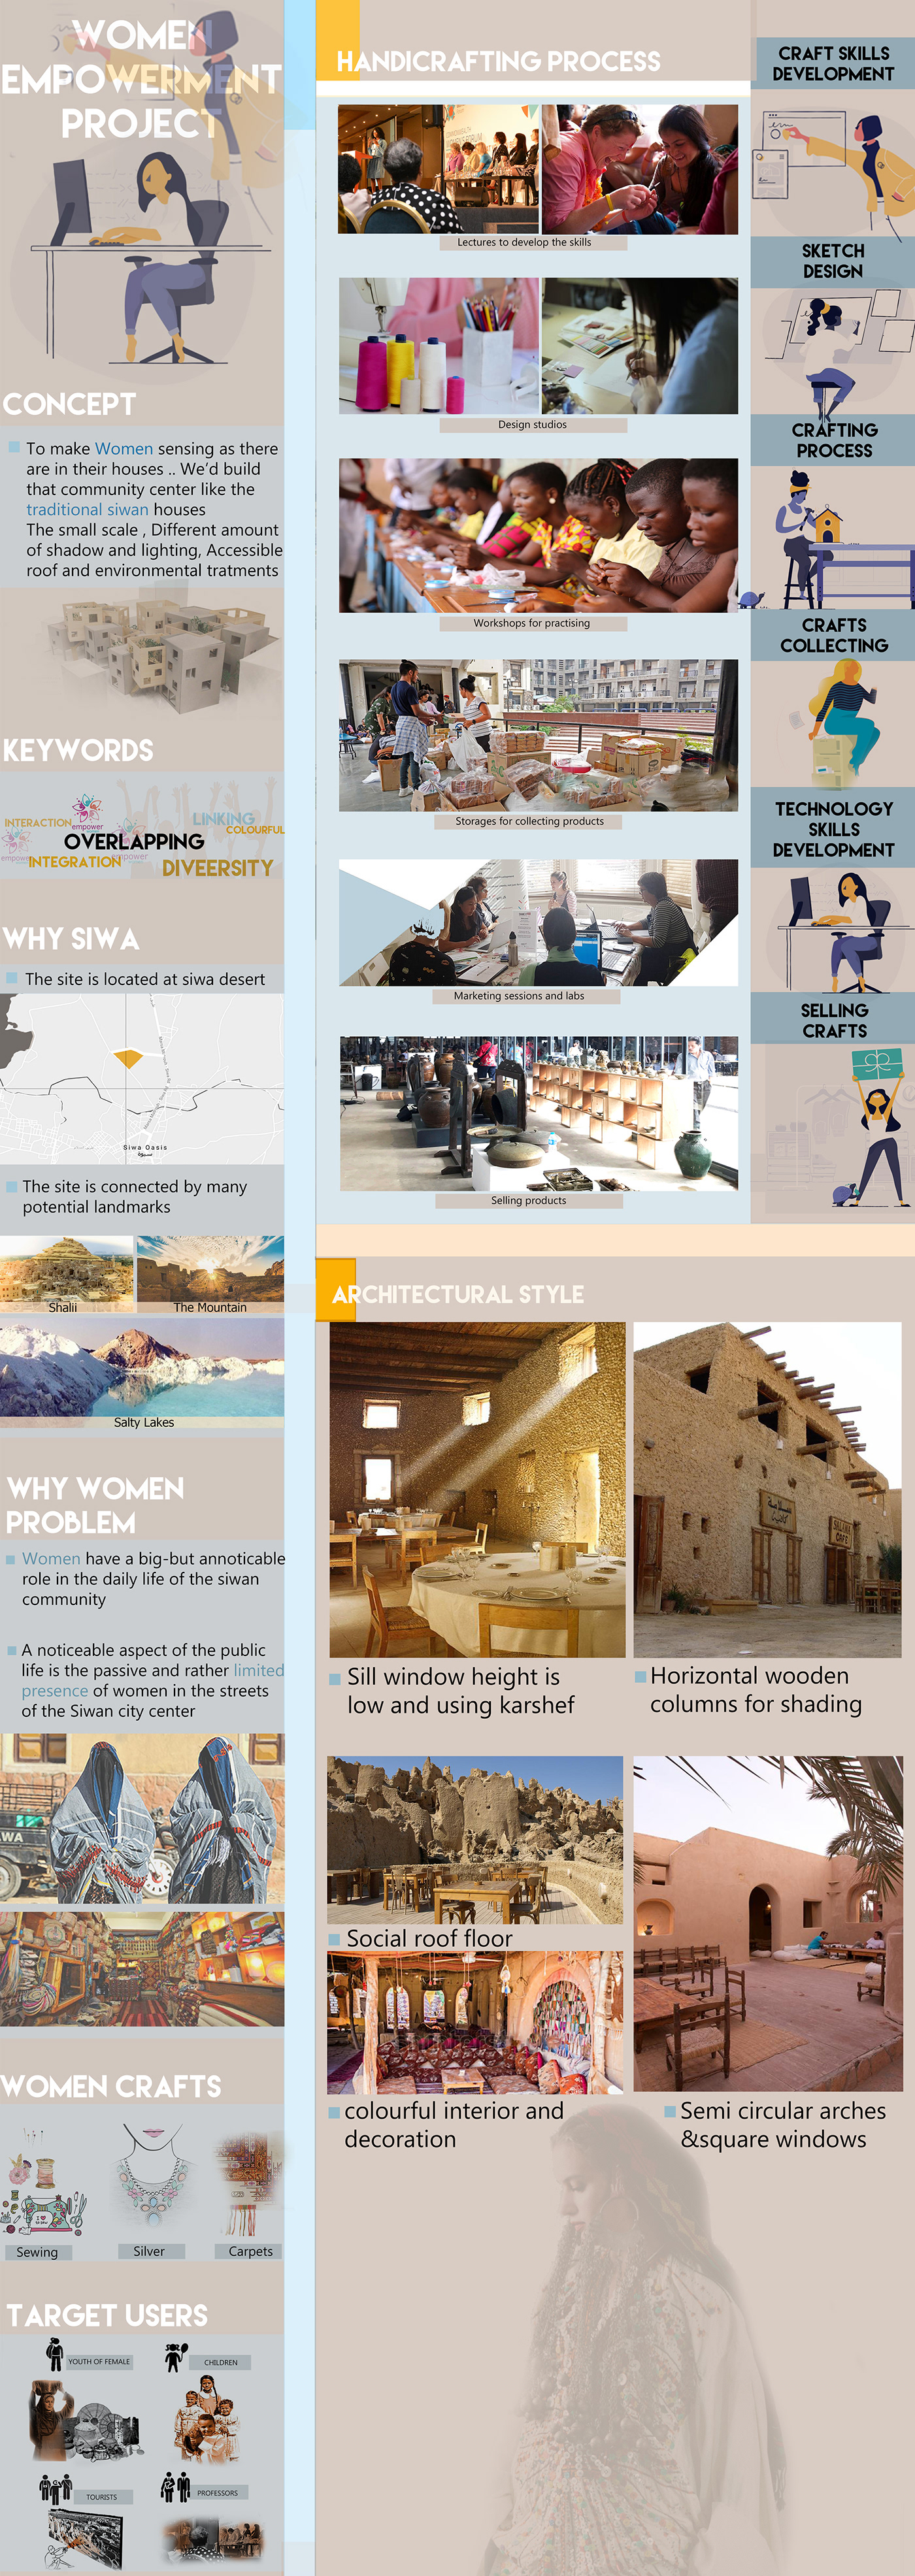 graduation project community cultural egyptian architecture environmental Landscape Siwa Oasis social